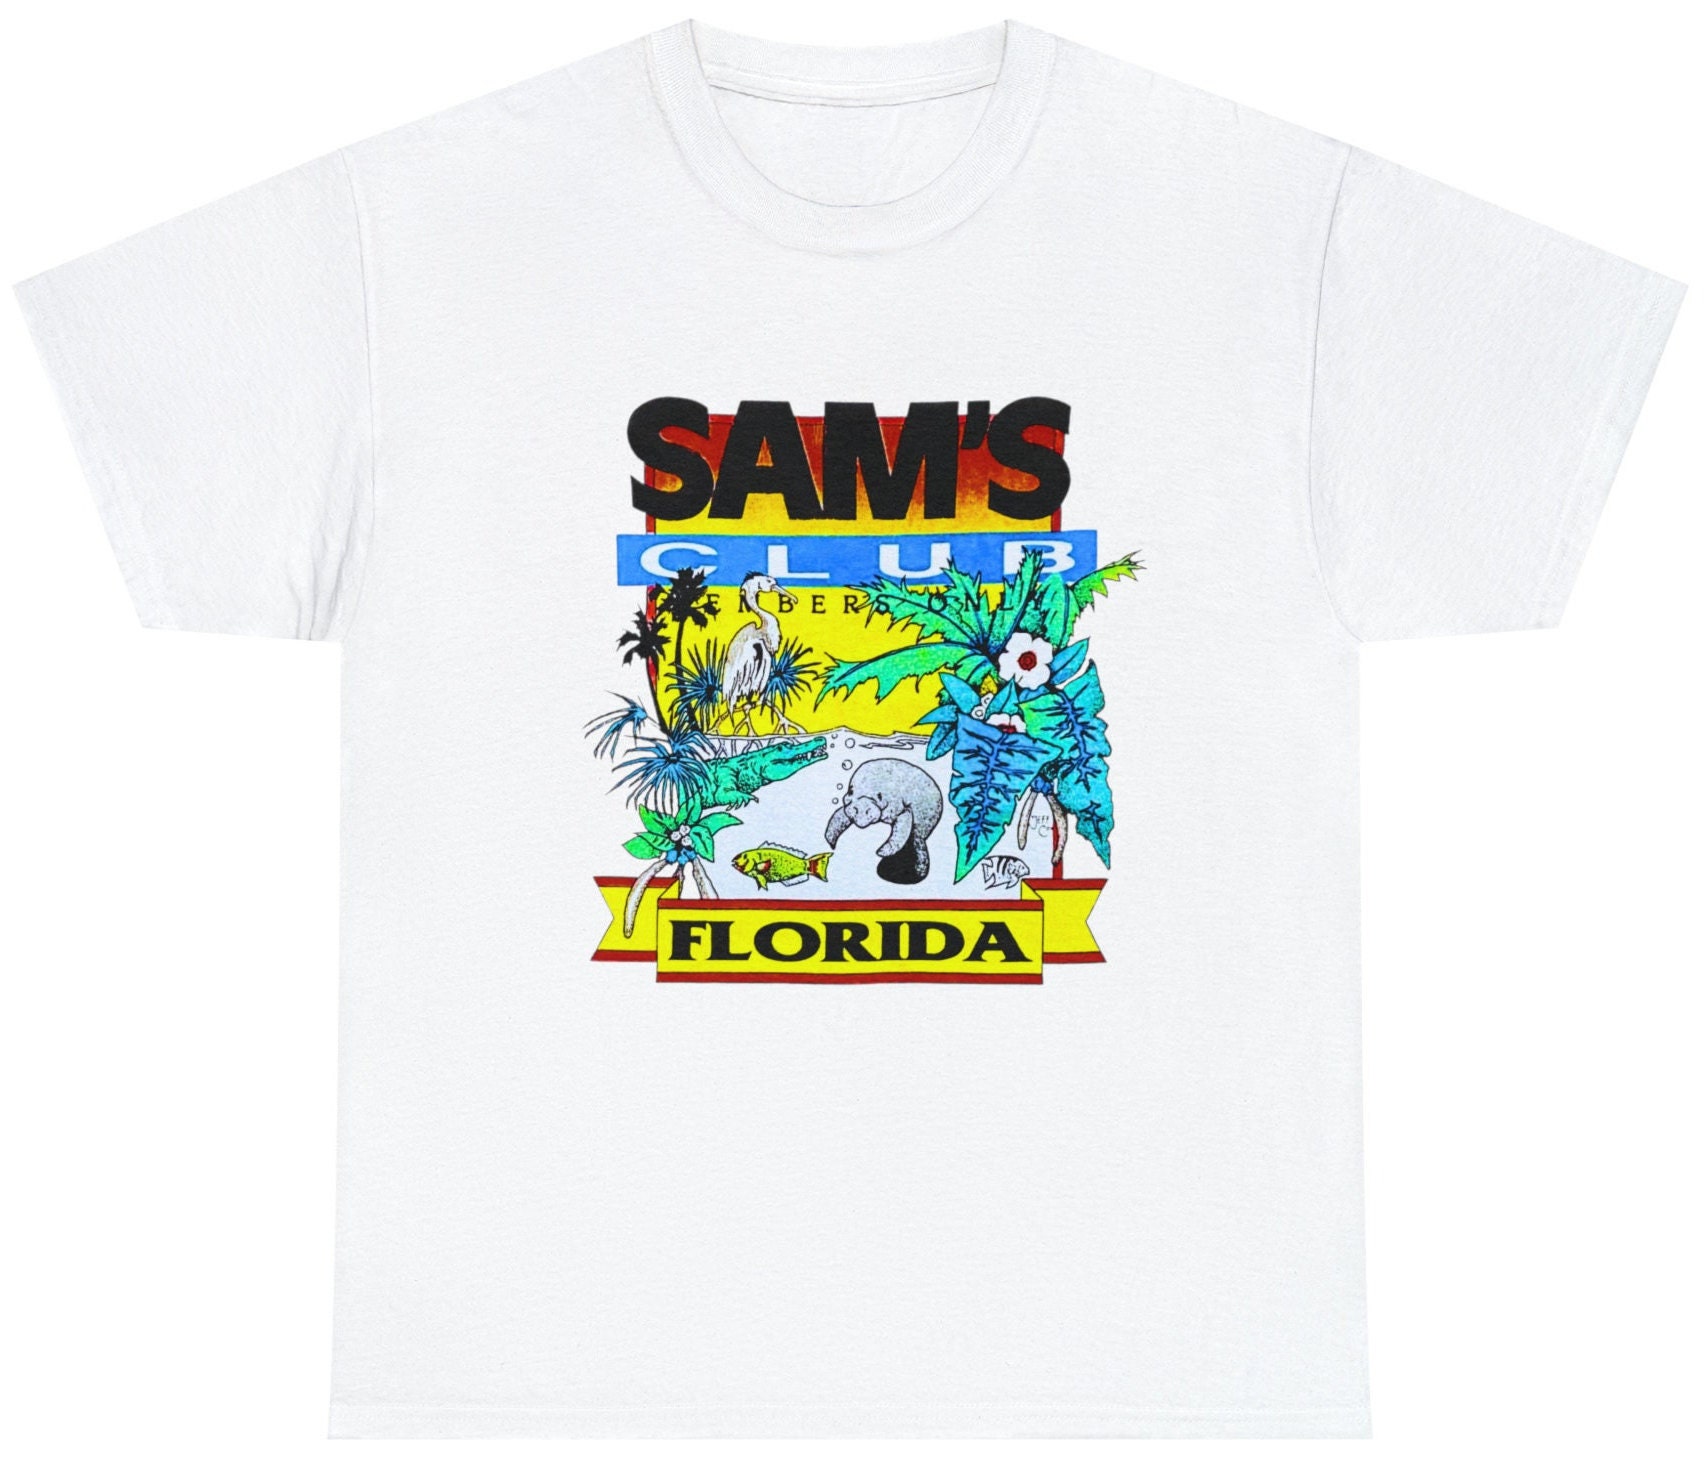 Sam's Club 'Louisiana' T-Shirt So Terribly Wrong That it's Funny